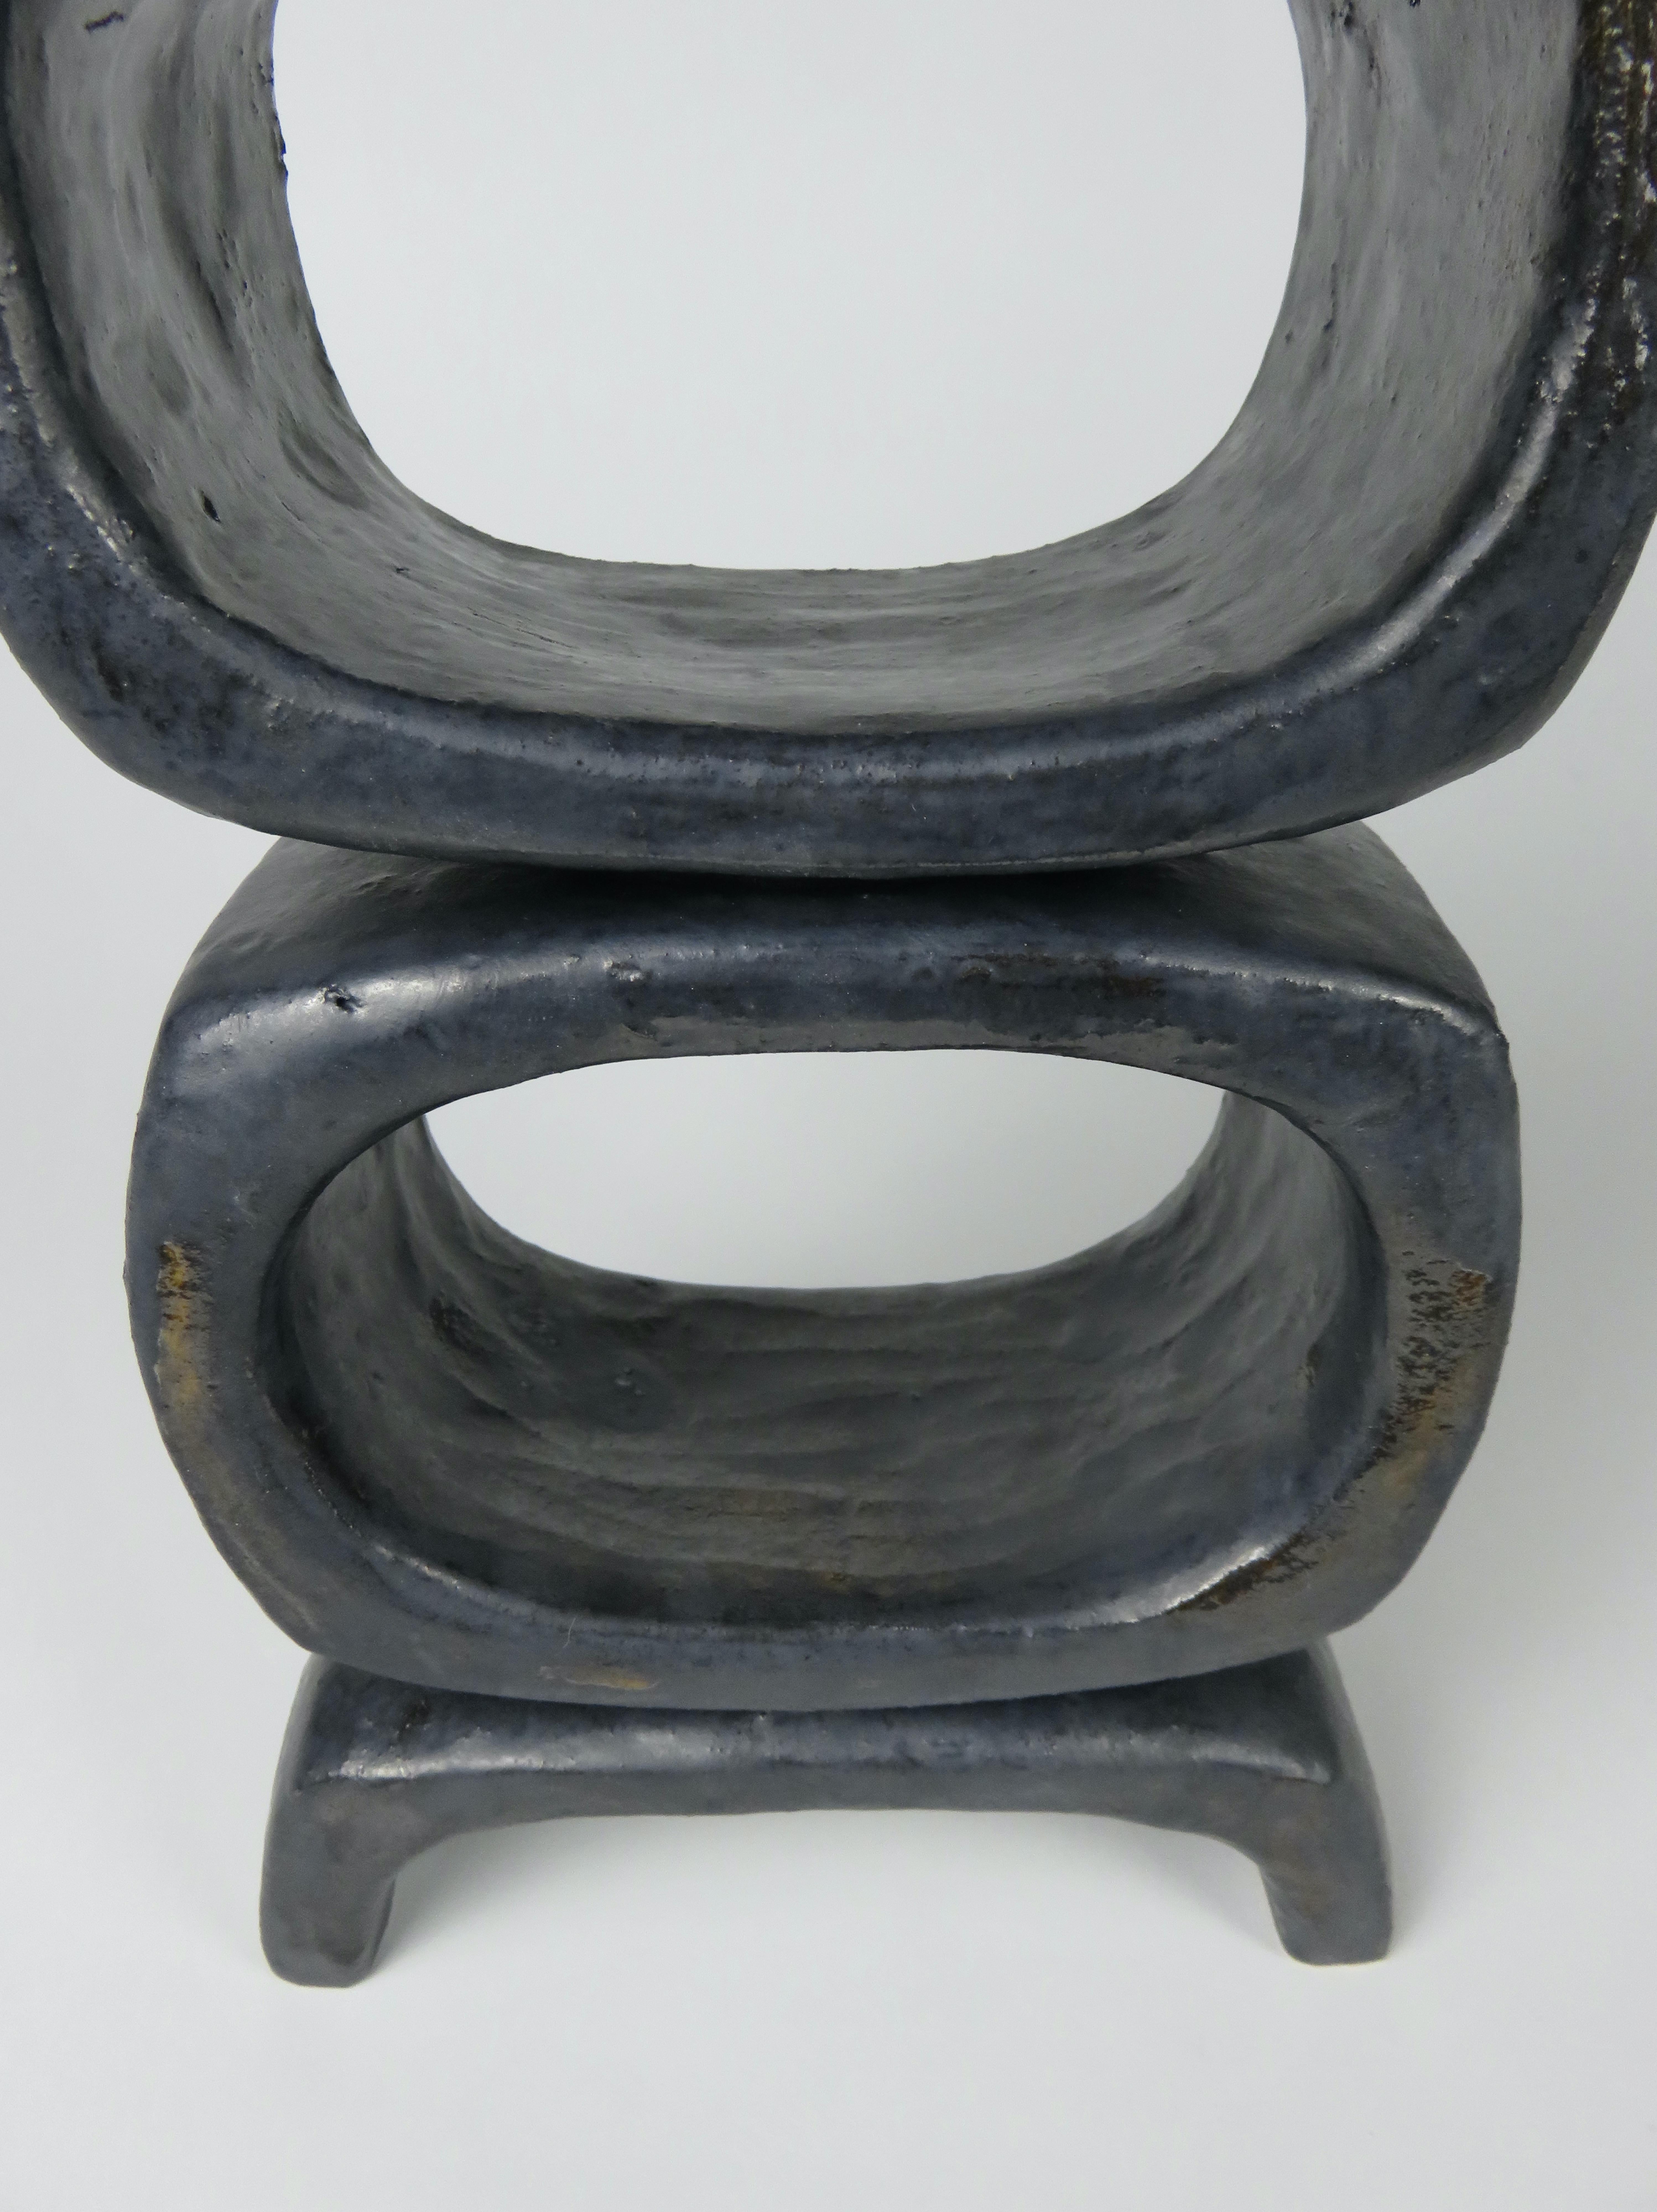 3 Rectangular Ovals, Short Angled Legs, Metallic Black-Glazed Clay Sculpture #1 2